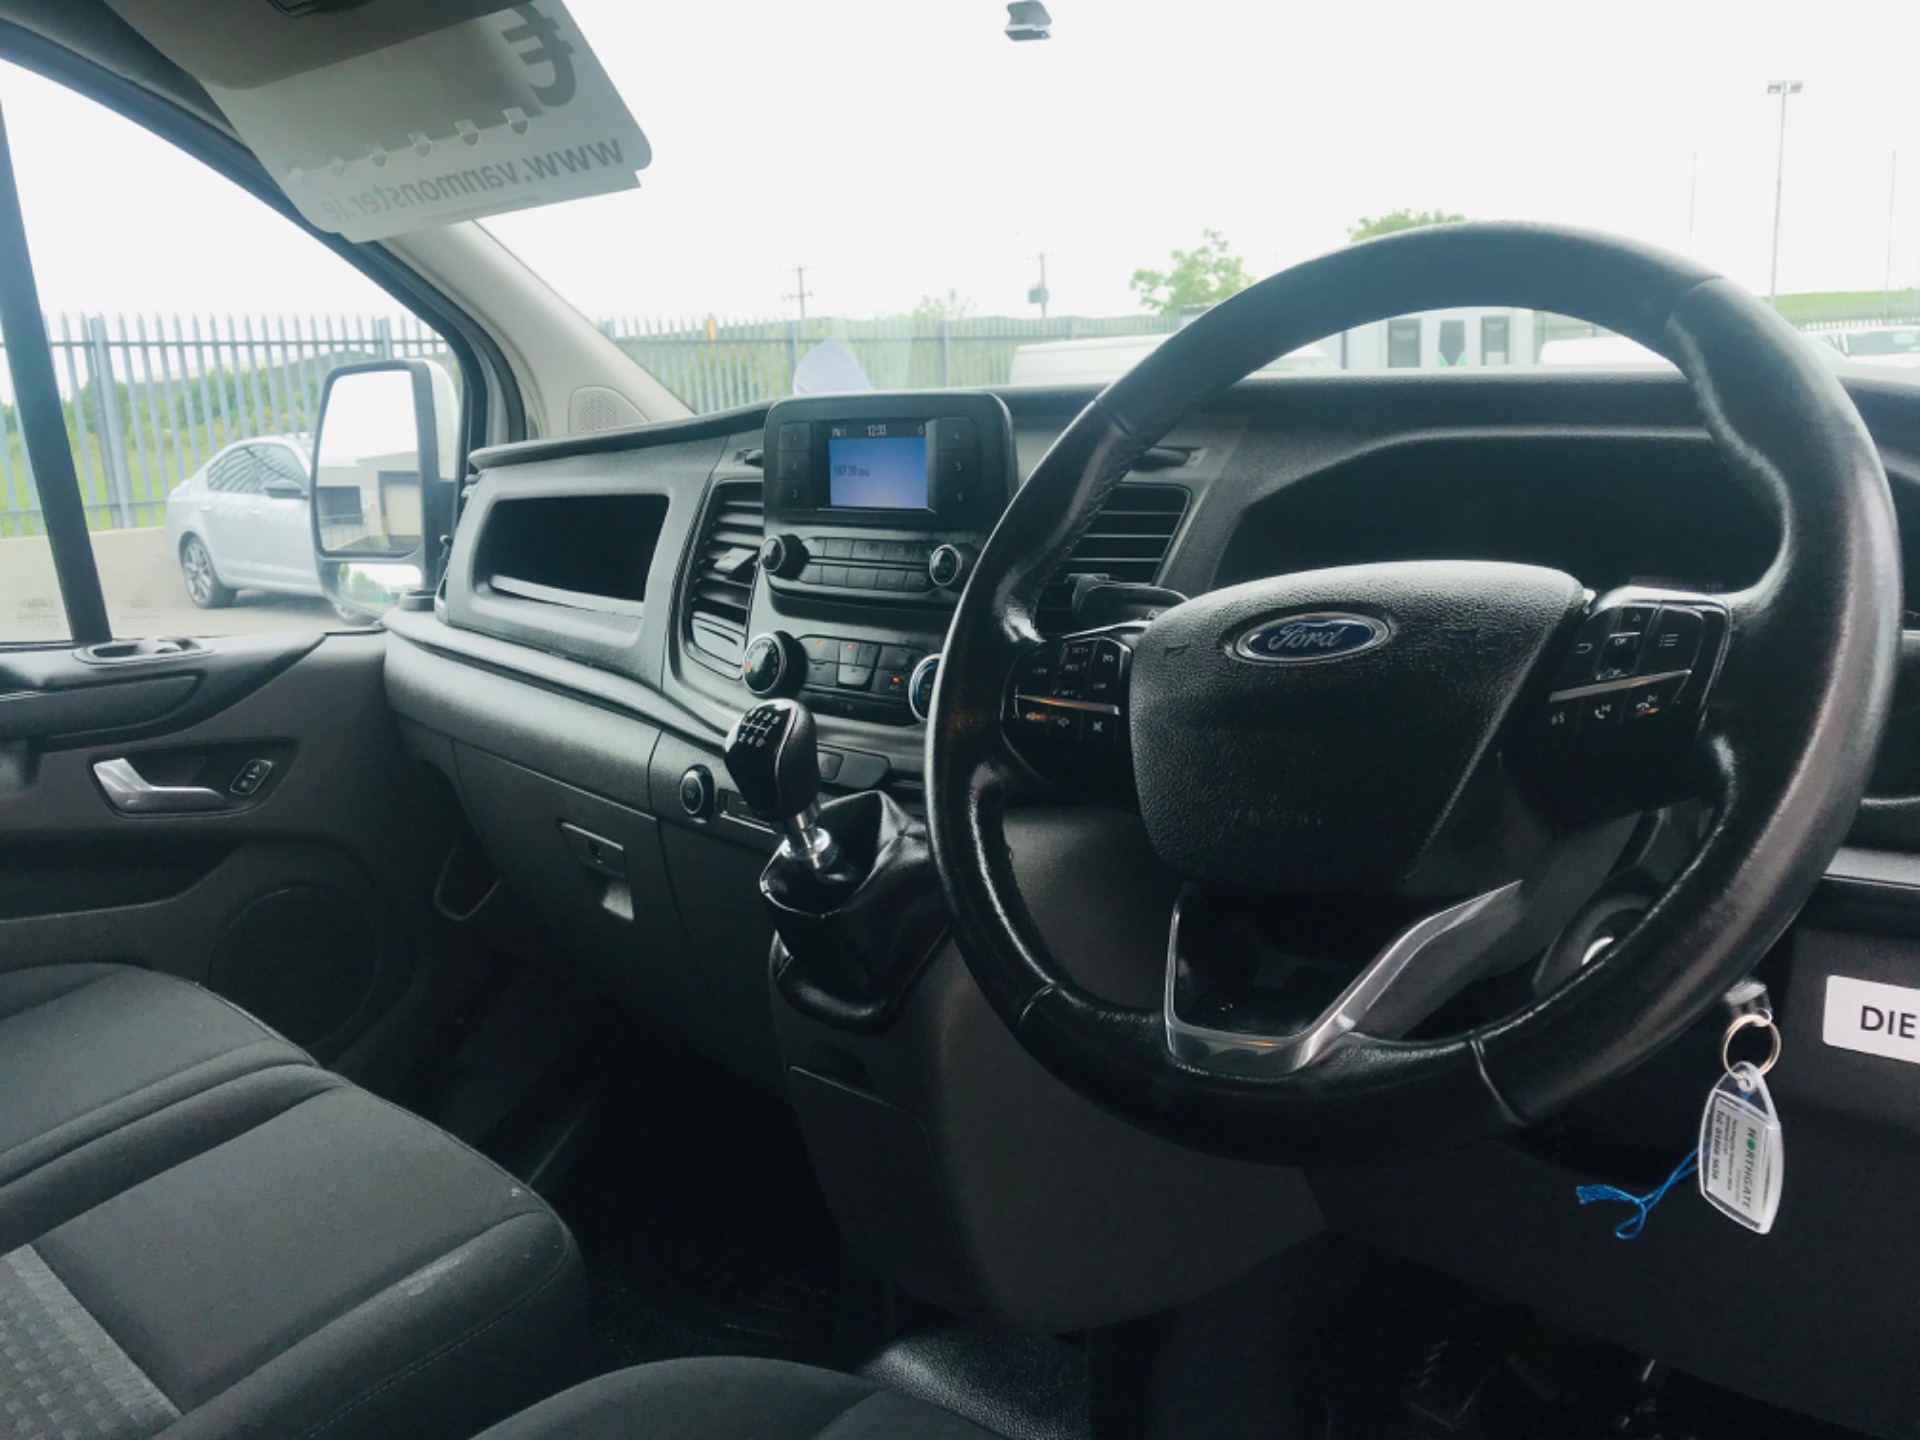 2019 Ford Transit Custom Trend 280 2.0 105PS 6SPD 3DR (191D30865) Thumbnail 14